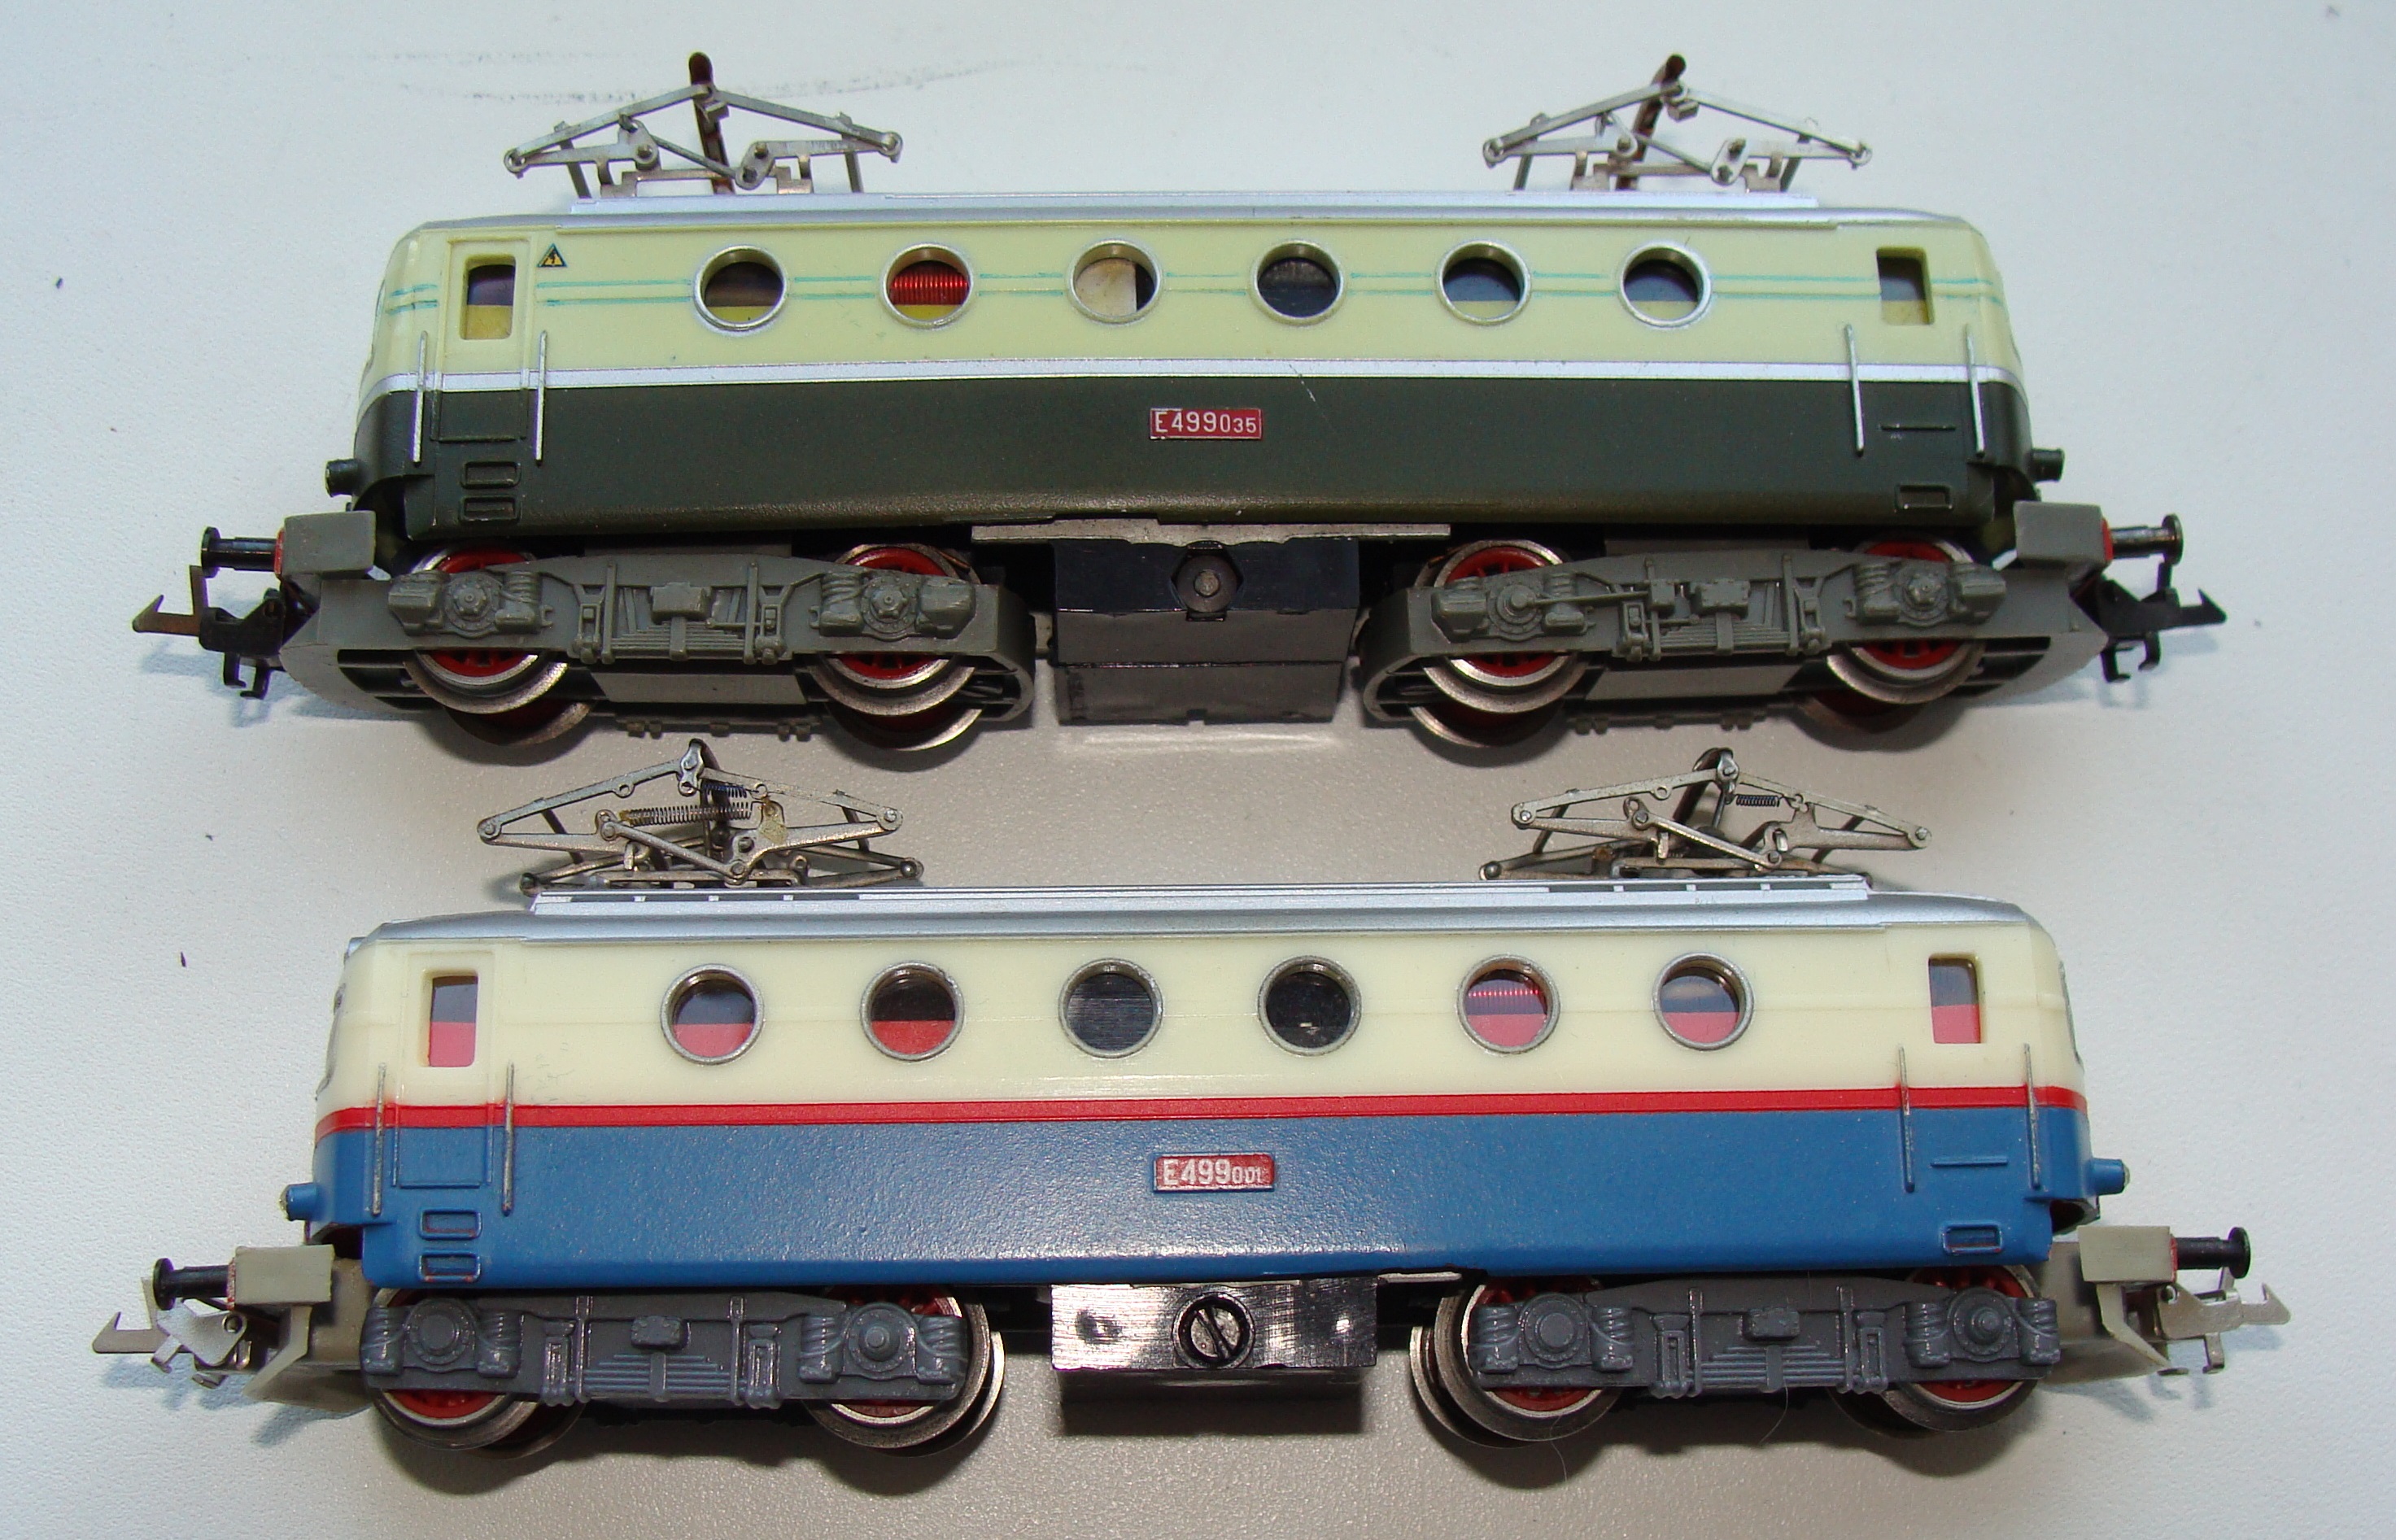 Модели Е499 производившиеся Zeuke до начала 70-х